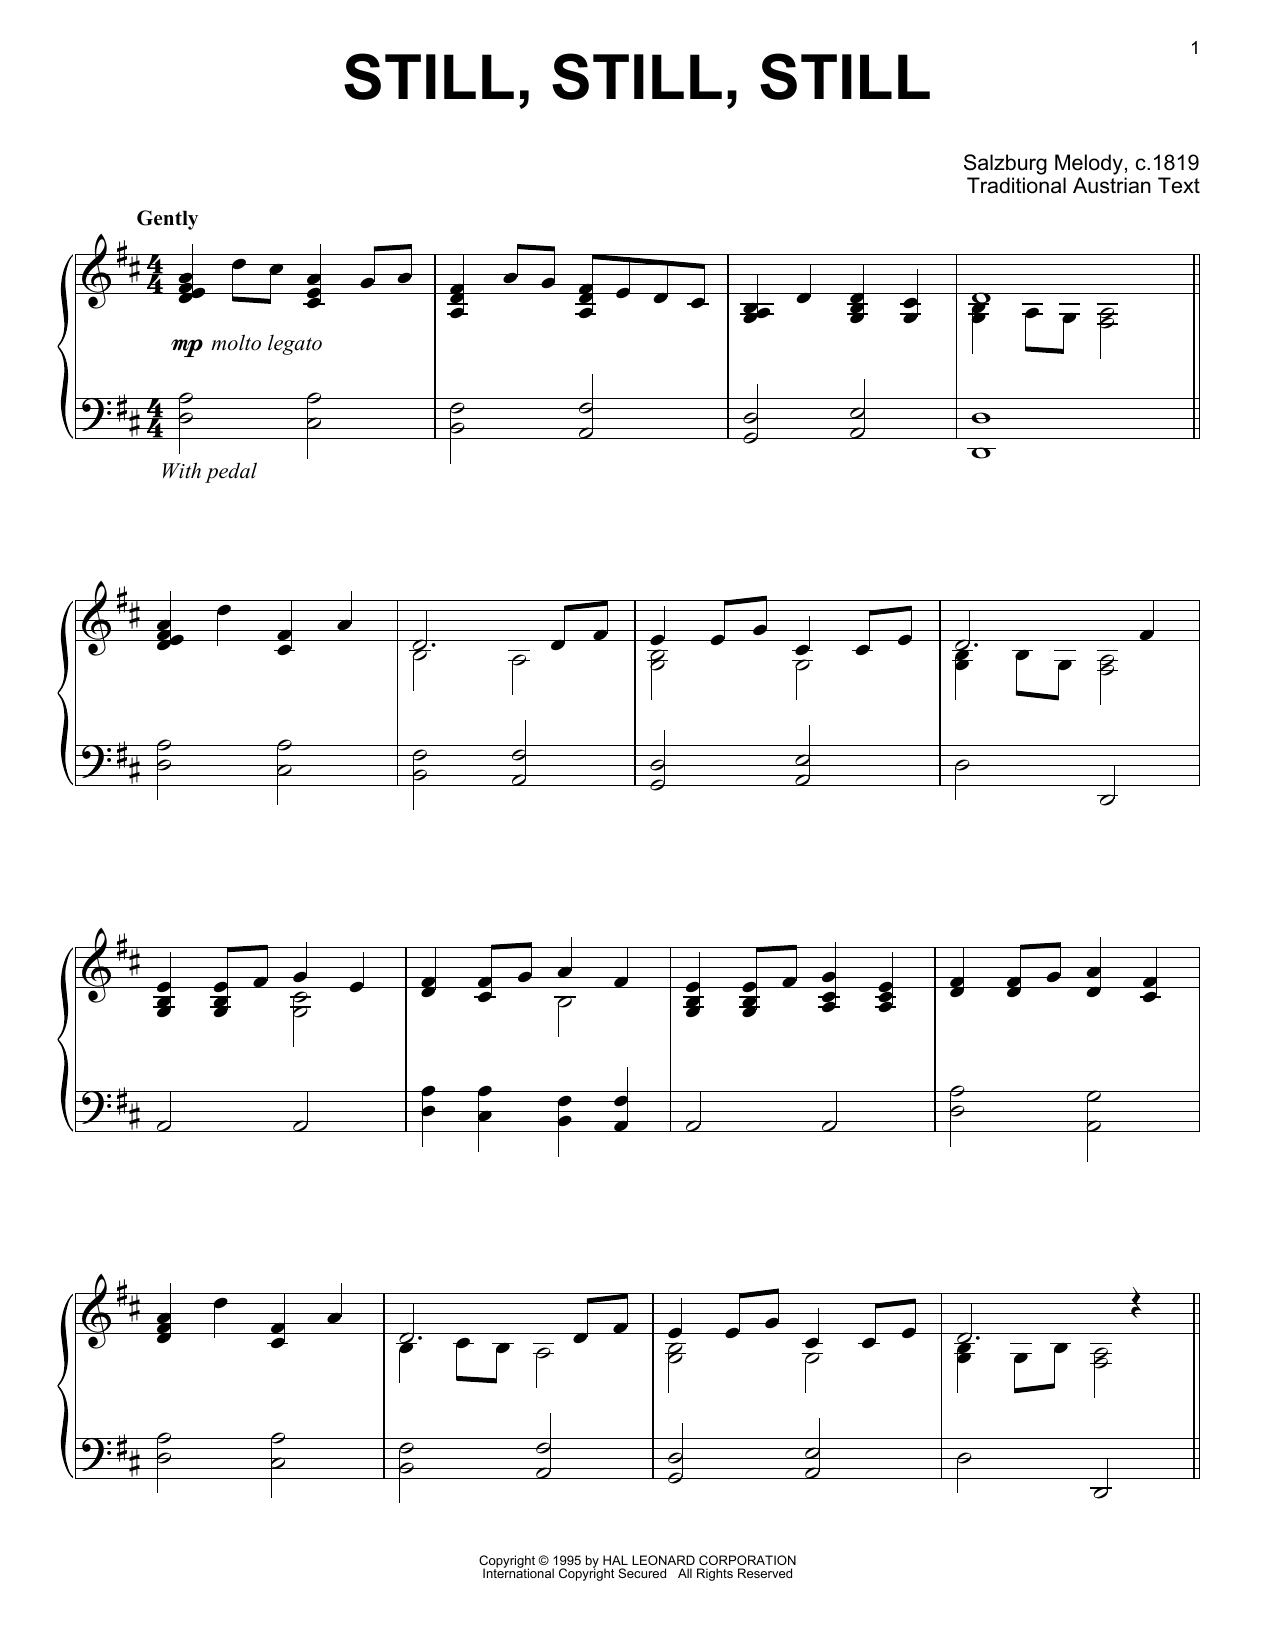 Traditional Austrian Text Still, Still, Still Sheet Music Notes & Chords for Piano - Download or Print PDF